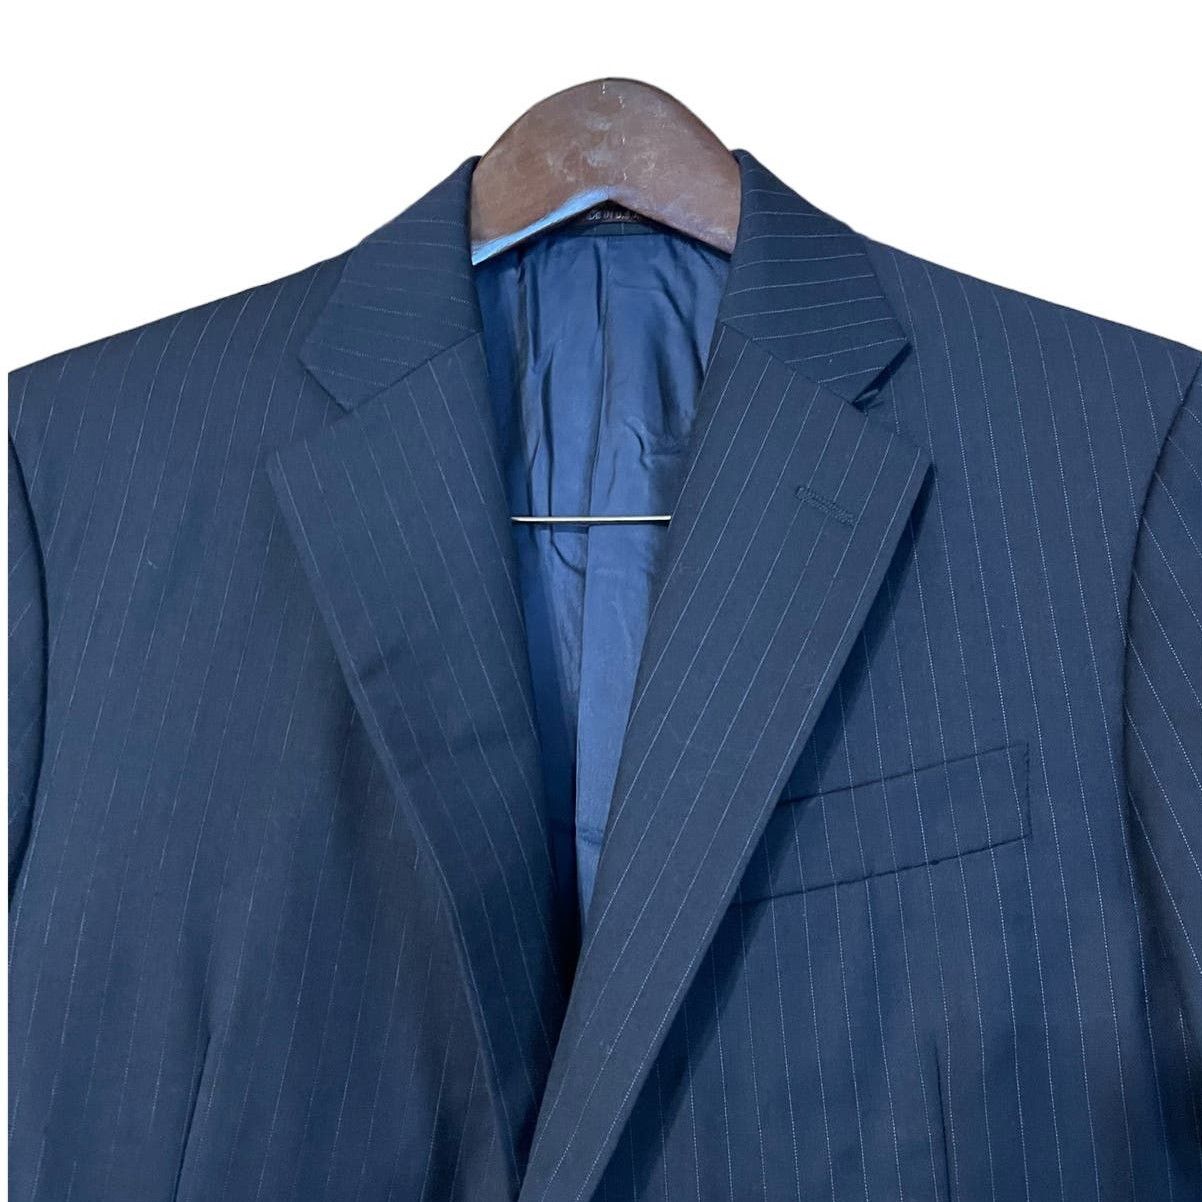 Hickey Freeman Hickey Freeman Mens Blue Pinstripe Sports Jacket Blazer 42R Size 42R - 2 Preview